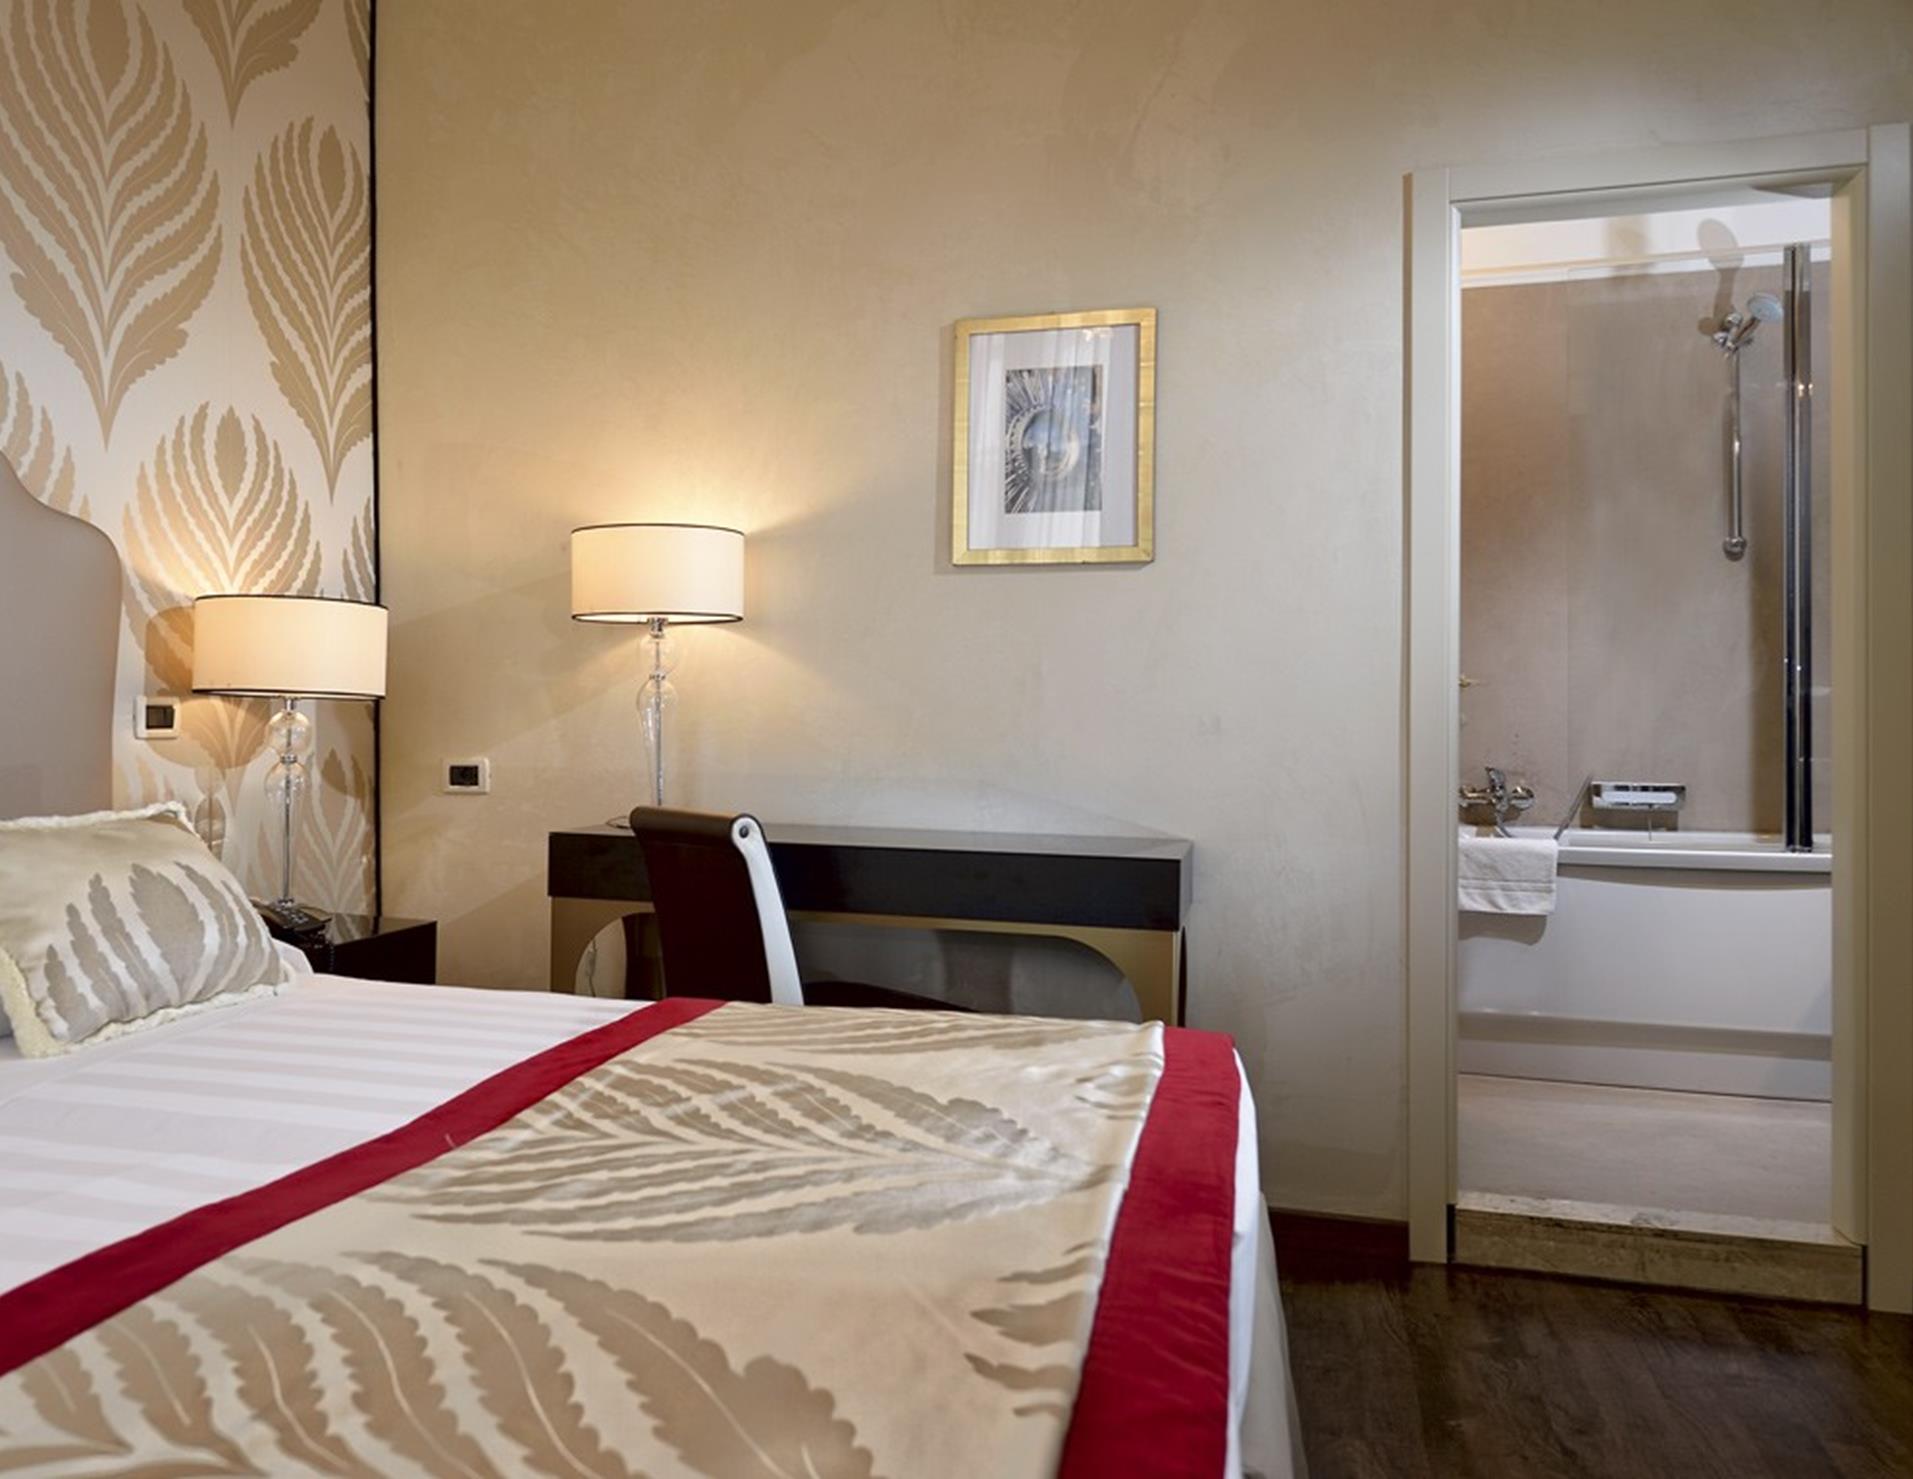 Hotel Principe - Room 8